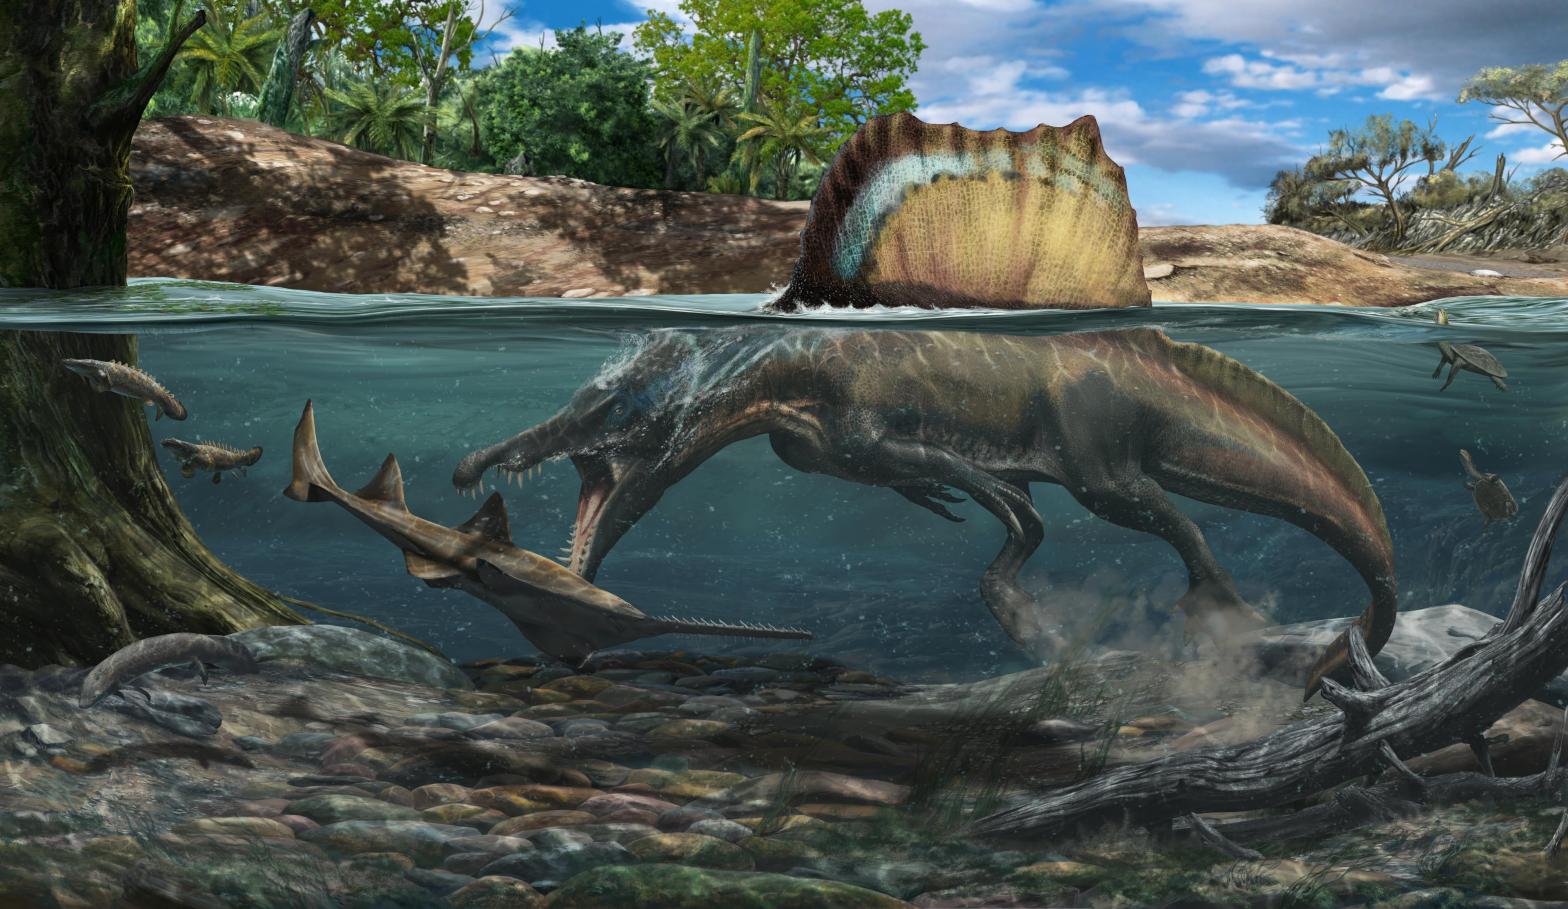 Artist's conception of Spinosaurus hunting a large Onchopristis. (Illustration: Davide Bonadonna)